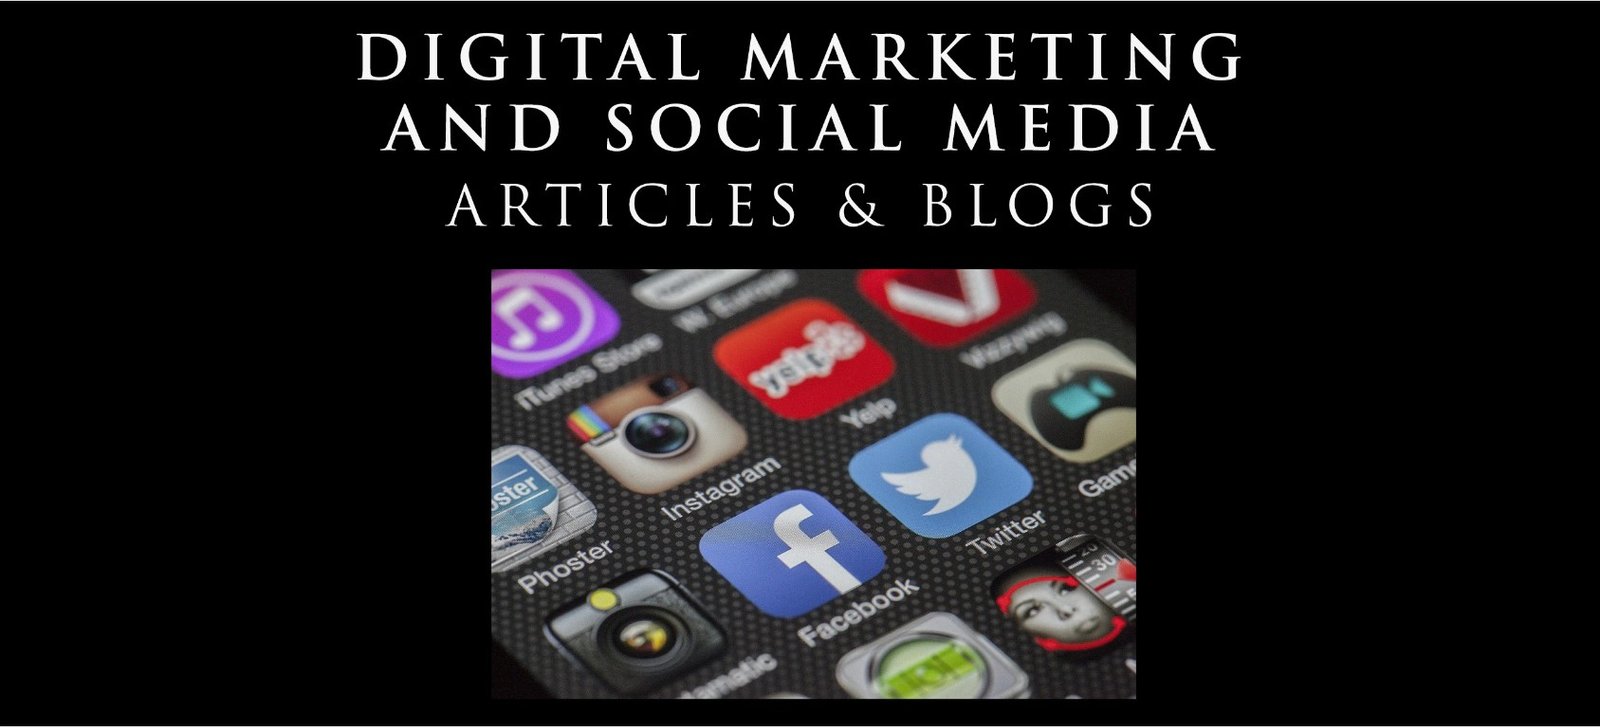 I will write digital marketing and social media articles